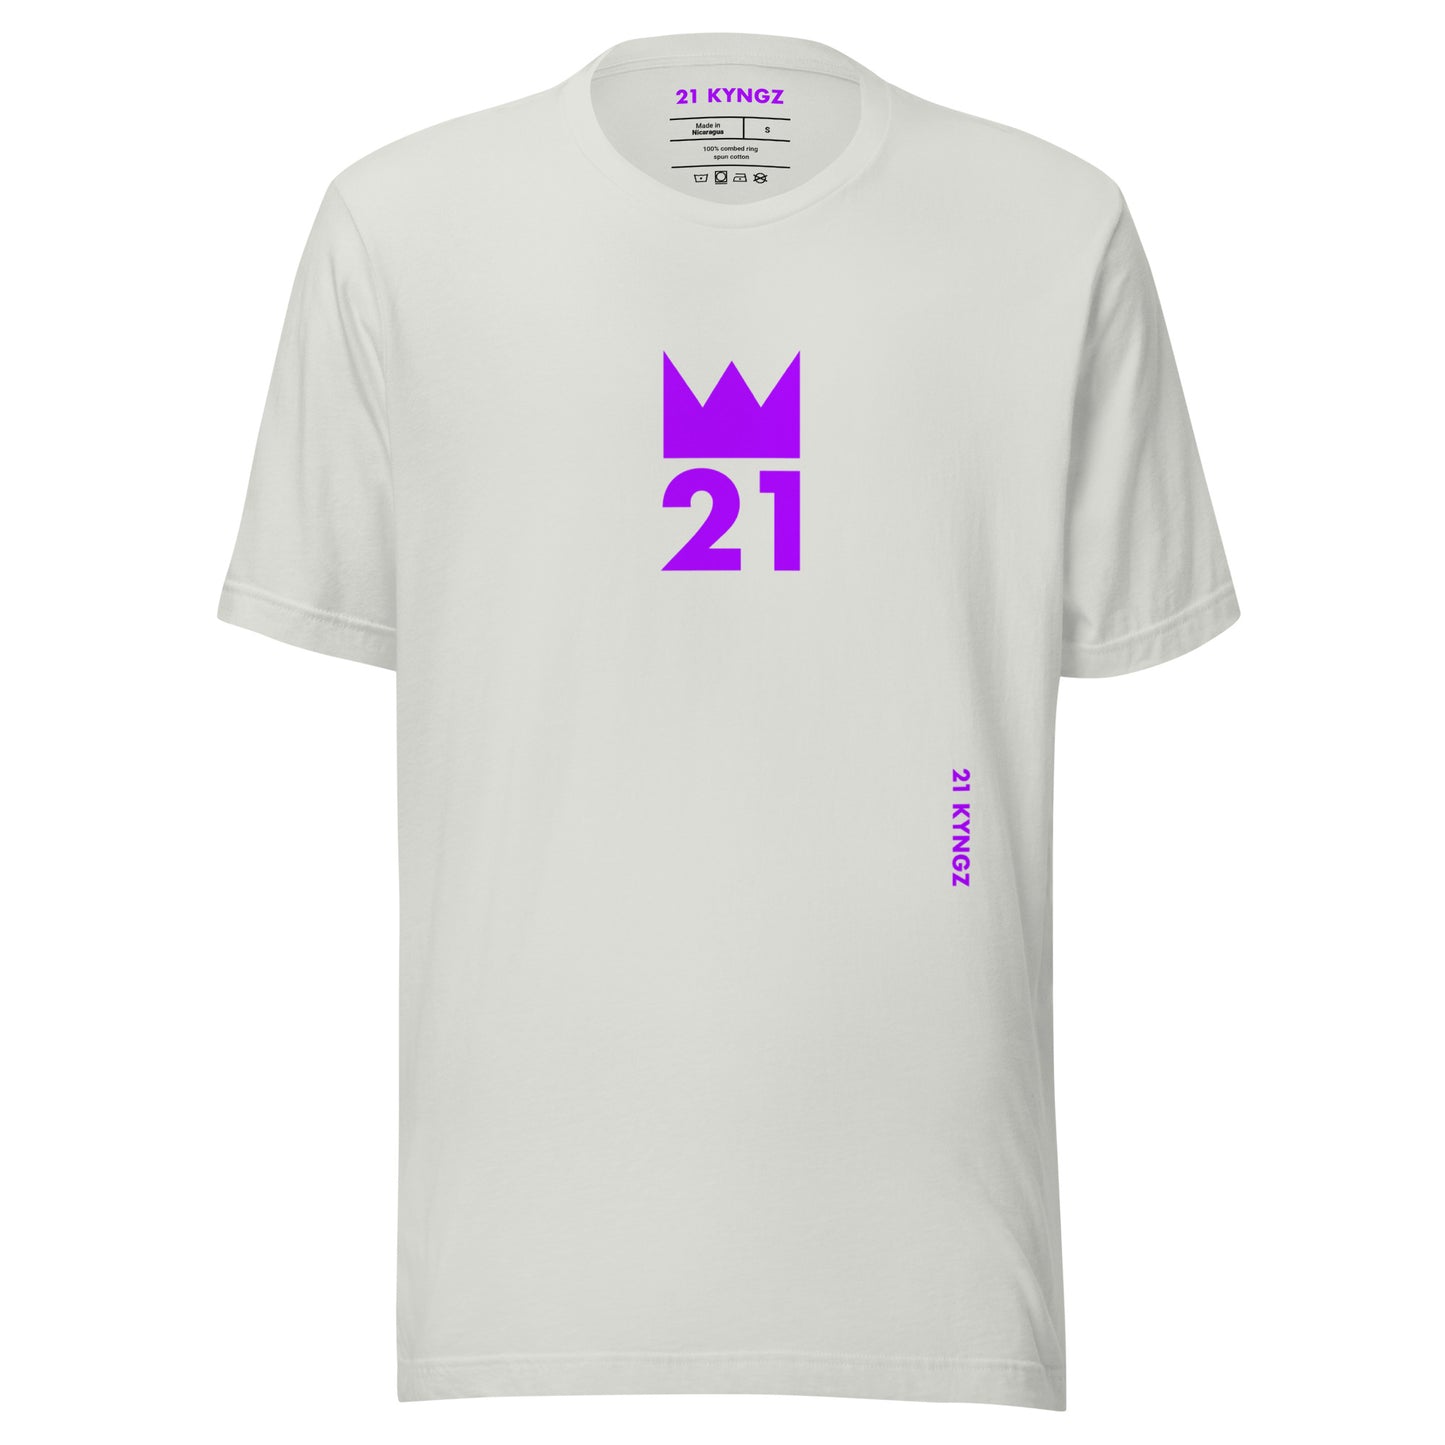 21 KYNGZ (Pur)2 t-shirt